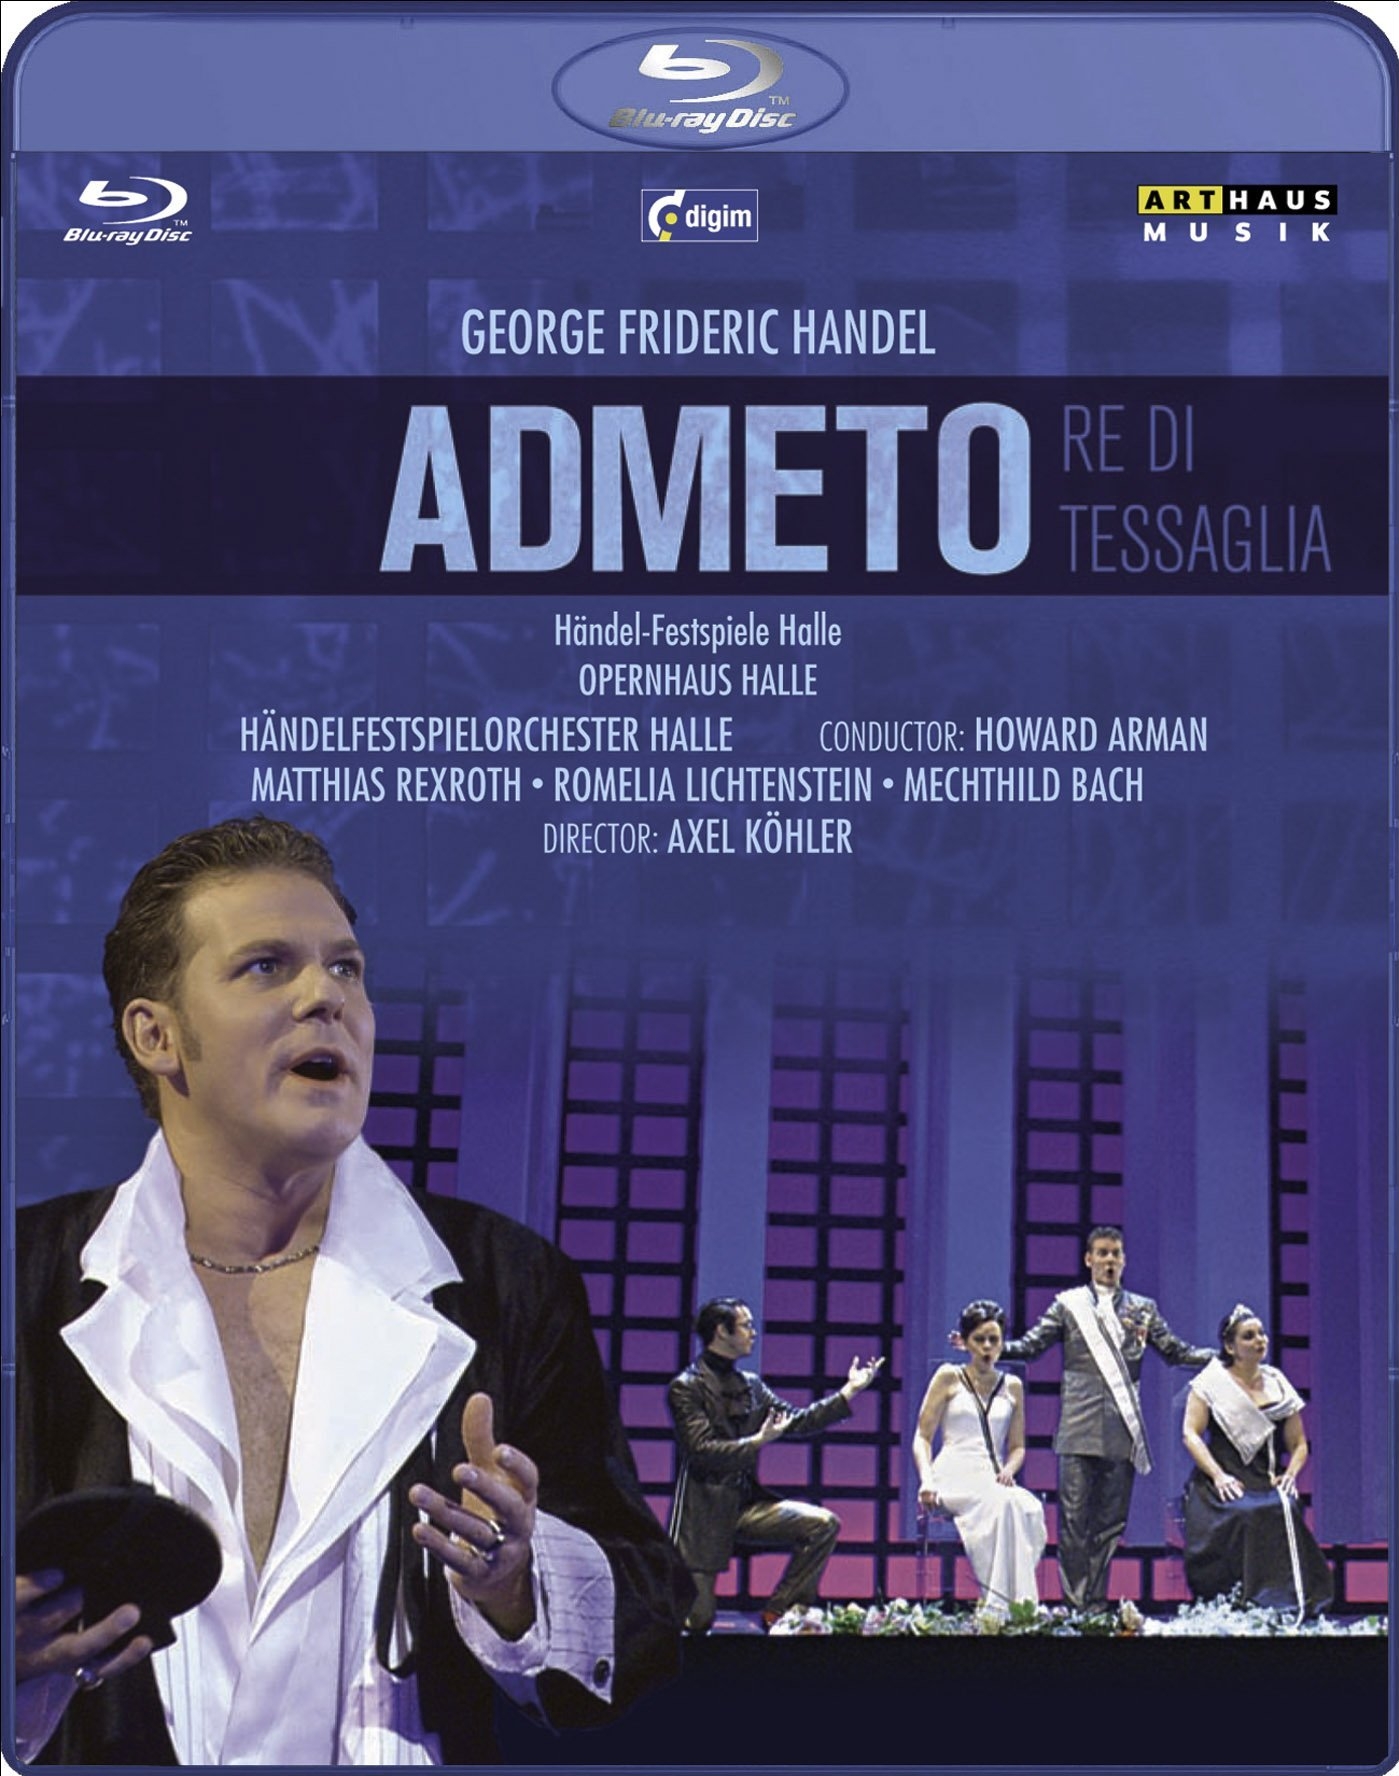 Admeto Handel Blu-ray 